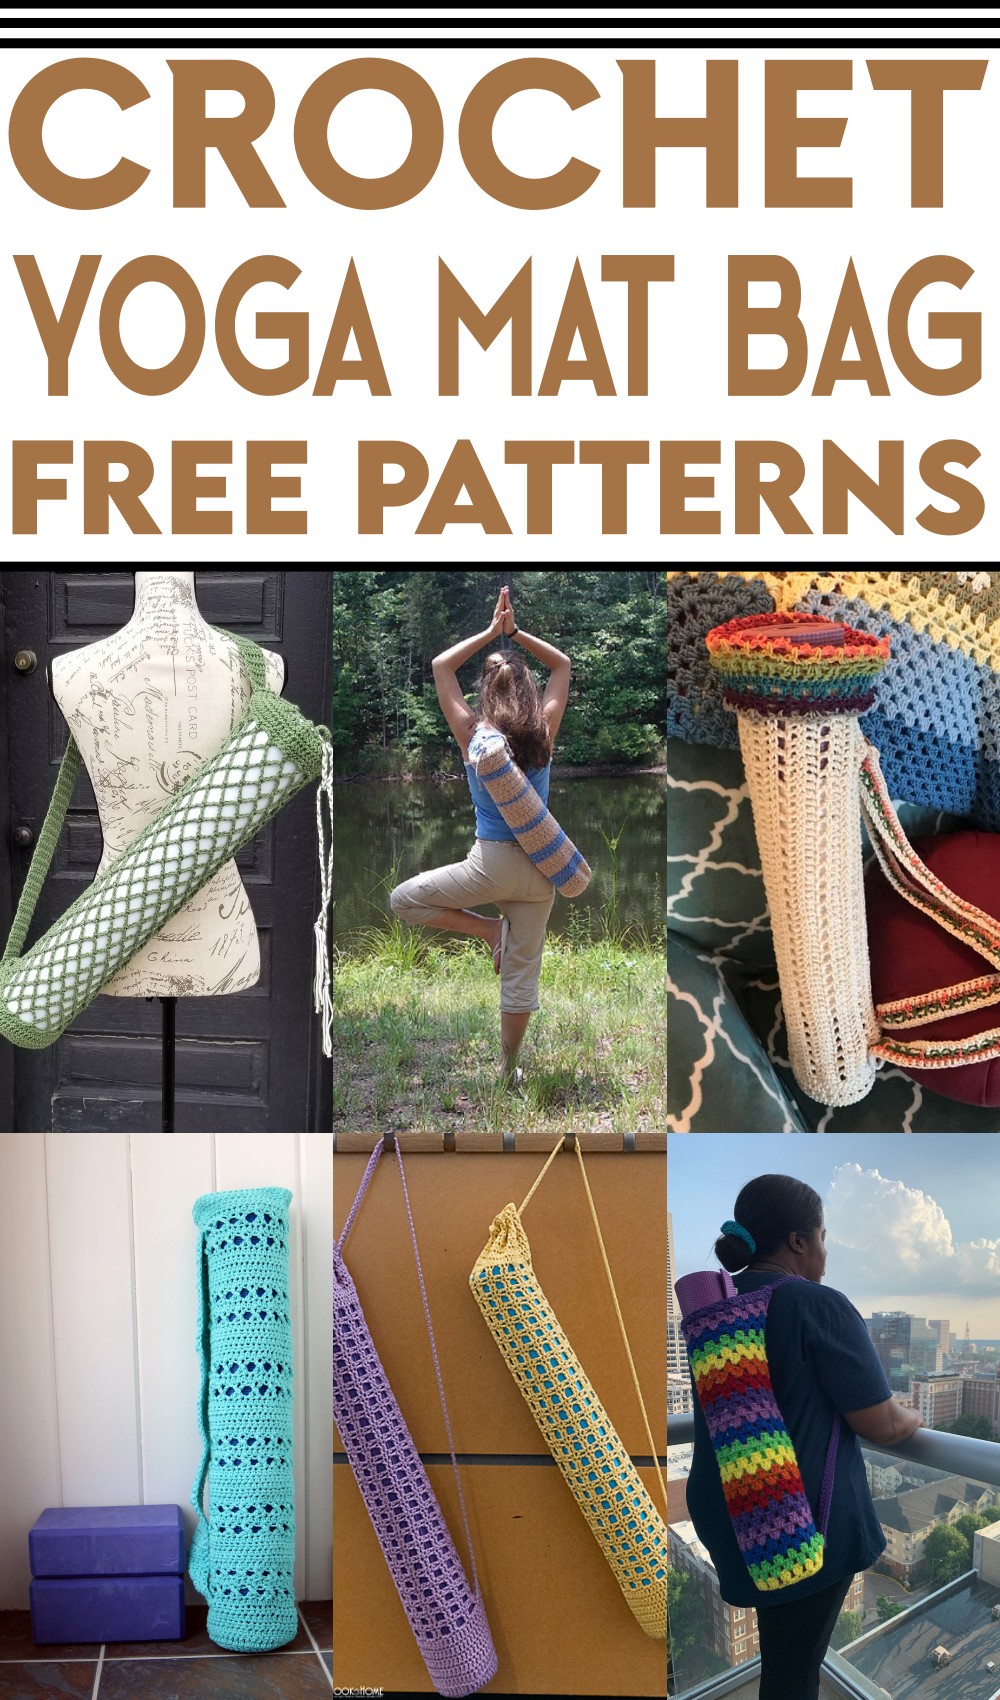 Free Crochet Yoga Mat Bag Patterns